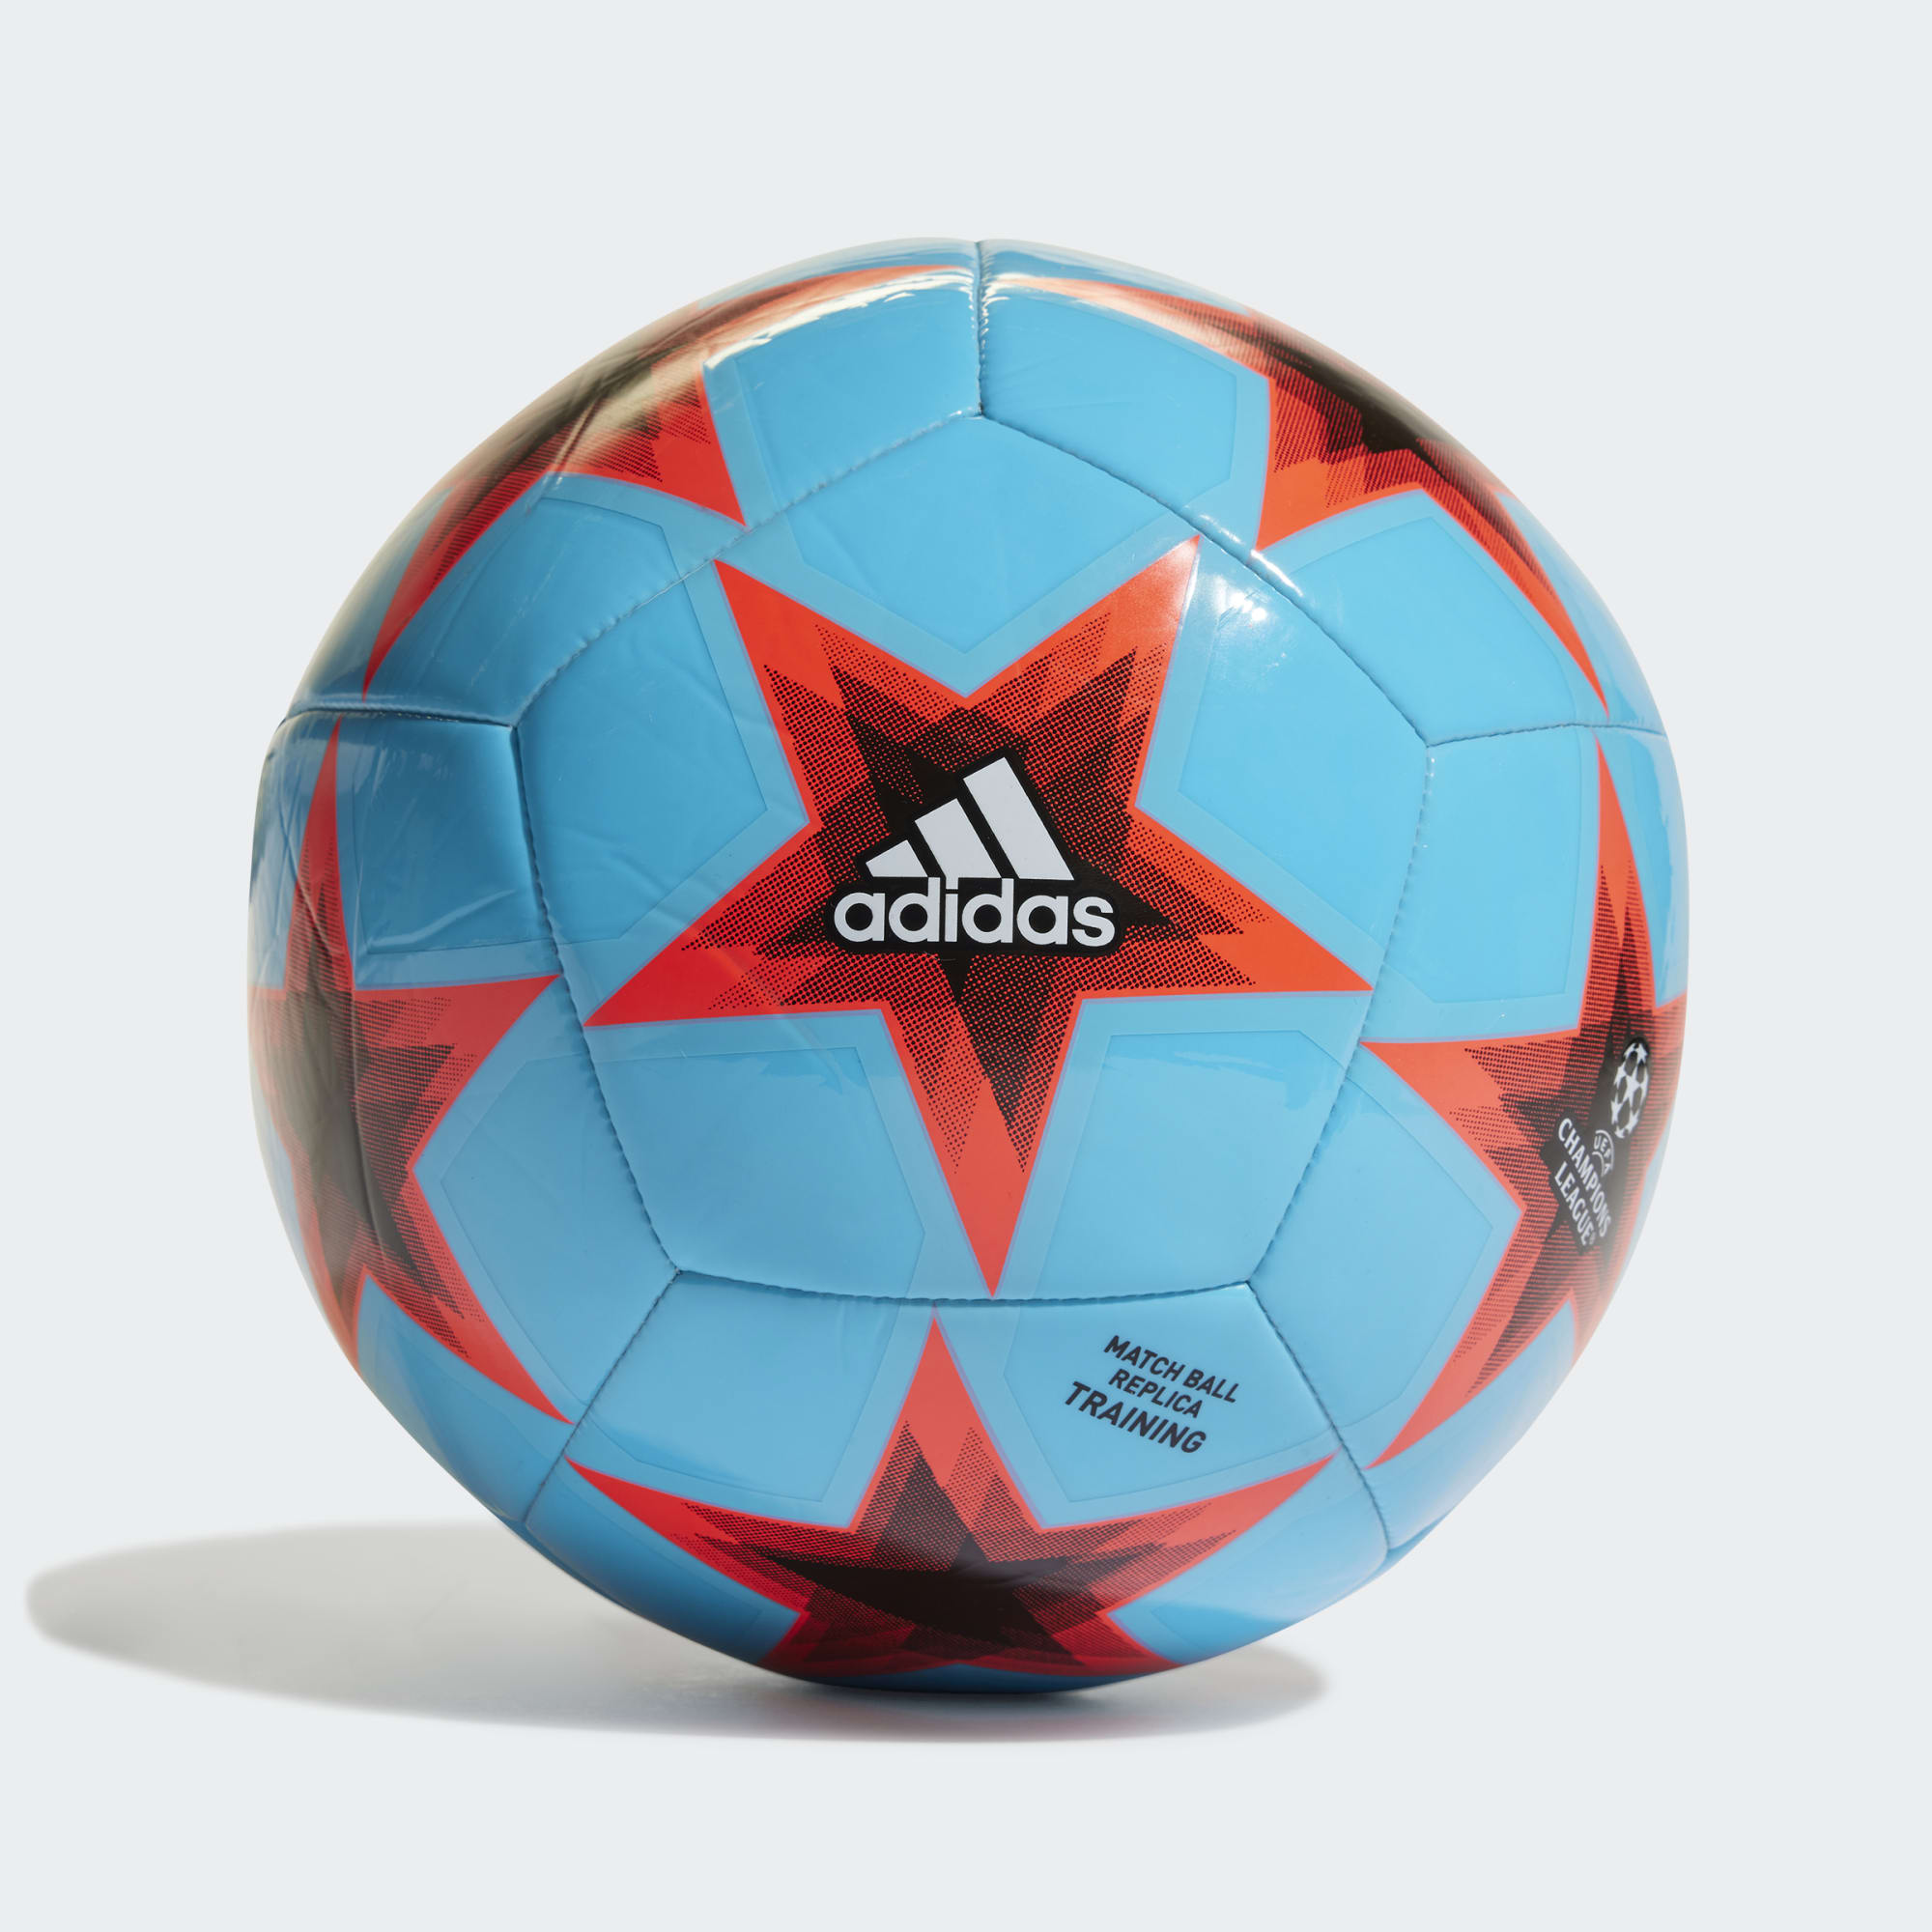 stefanssoccer.com:adidas Champions League Void Club Ball - Bright Cyan / Black Solar Red / White